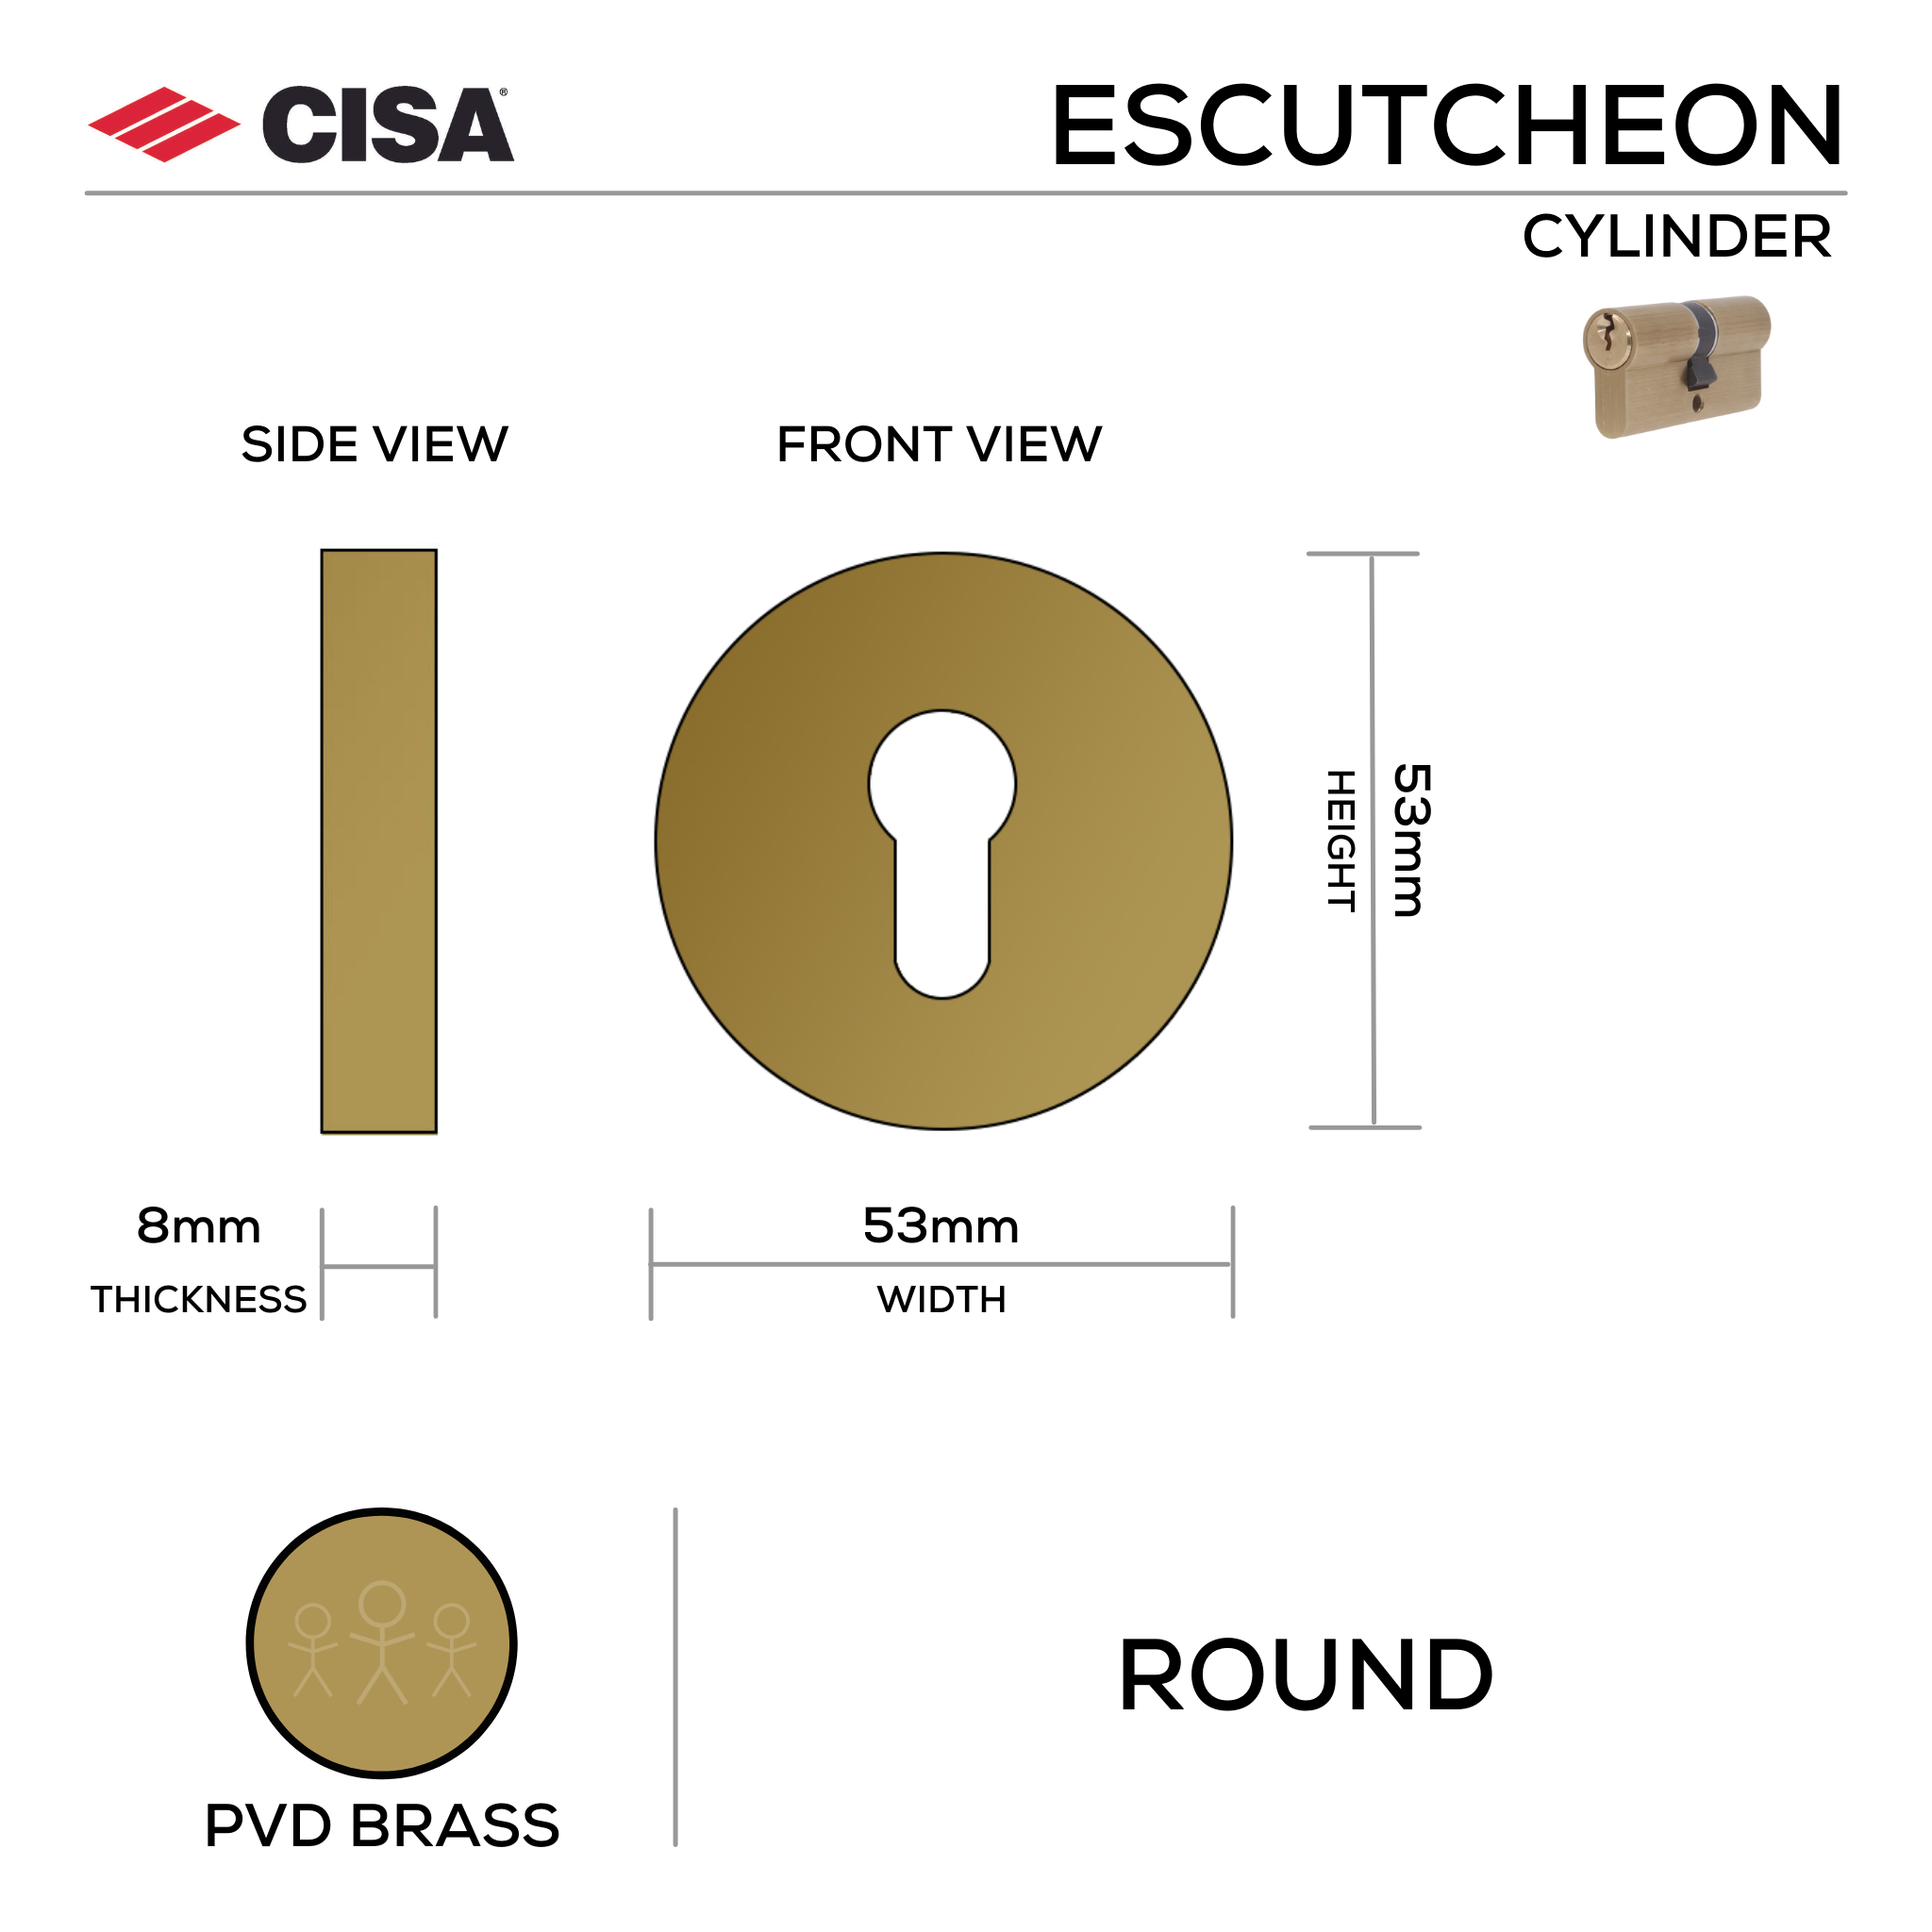 FE.R.C.SB, Cylinder Escutcheon, Round Rose, 53mm (h) x 53mm (w) x 8mm (t), PVD Brass, CISA